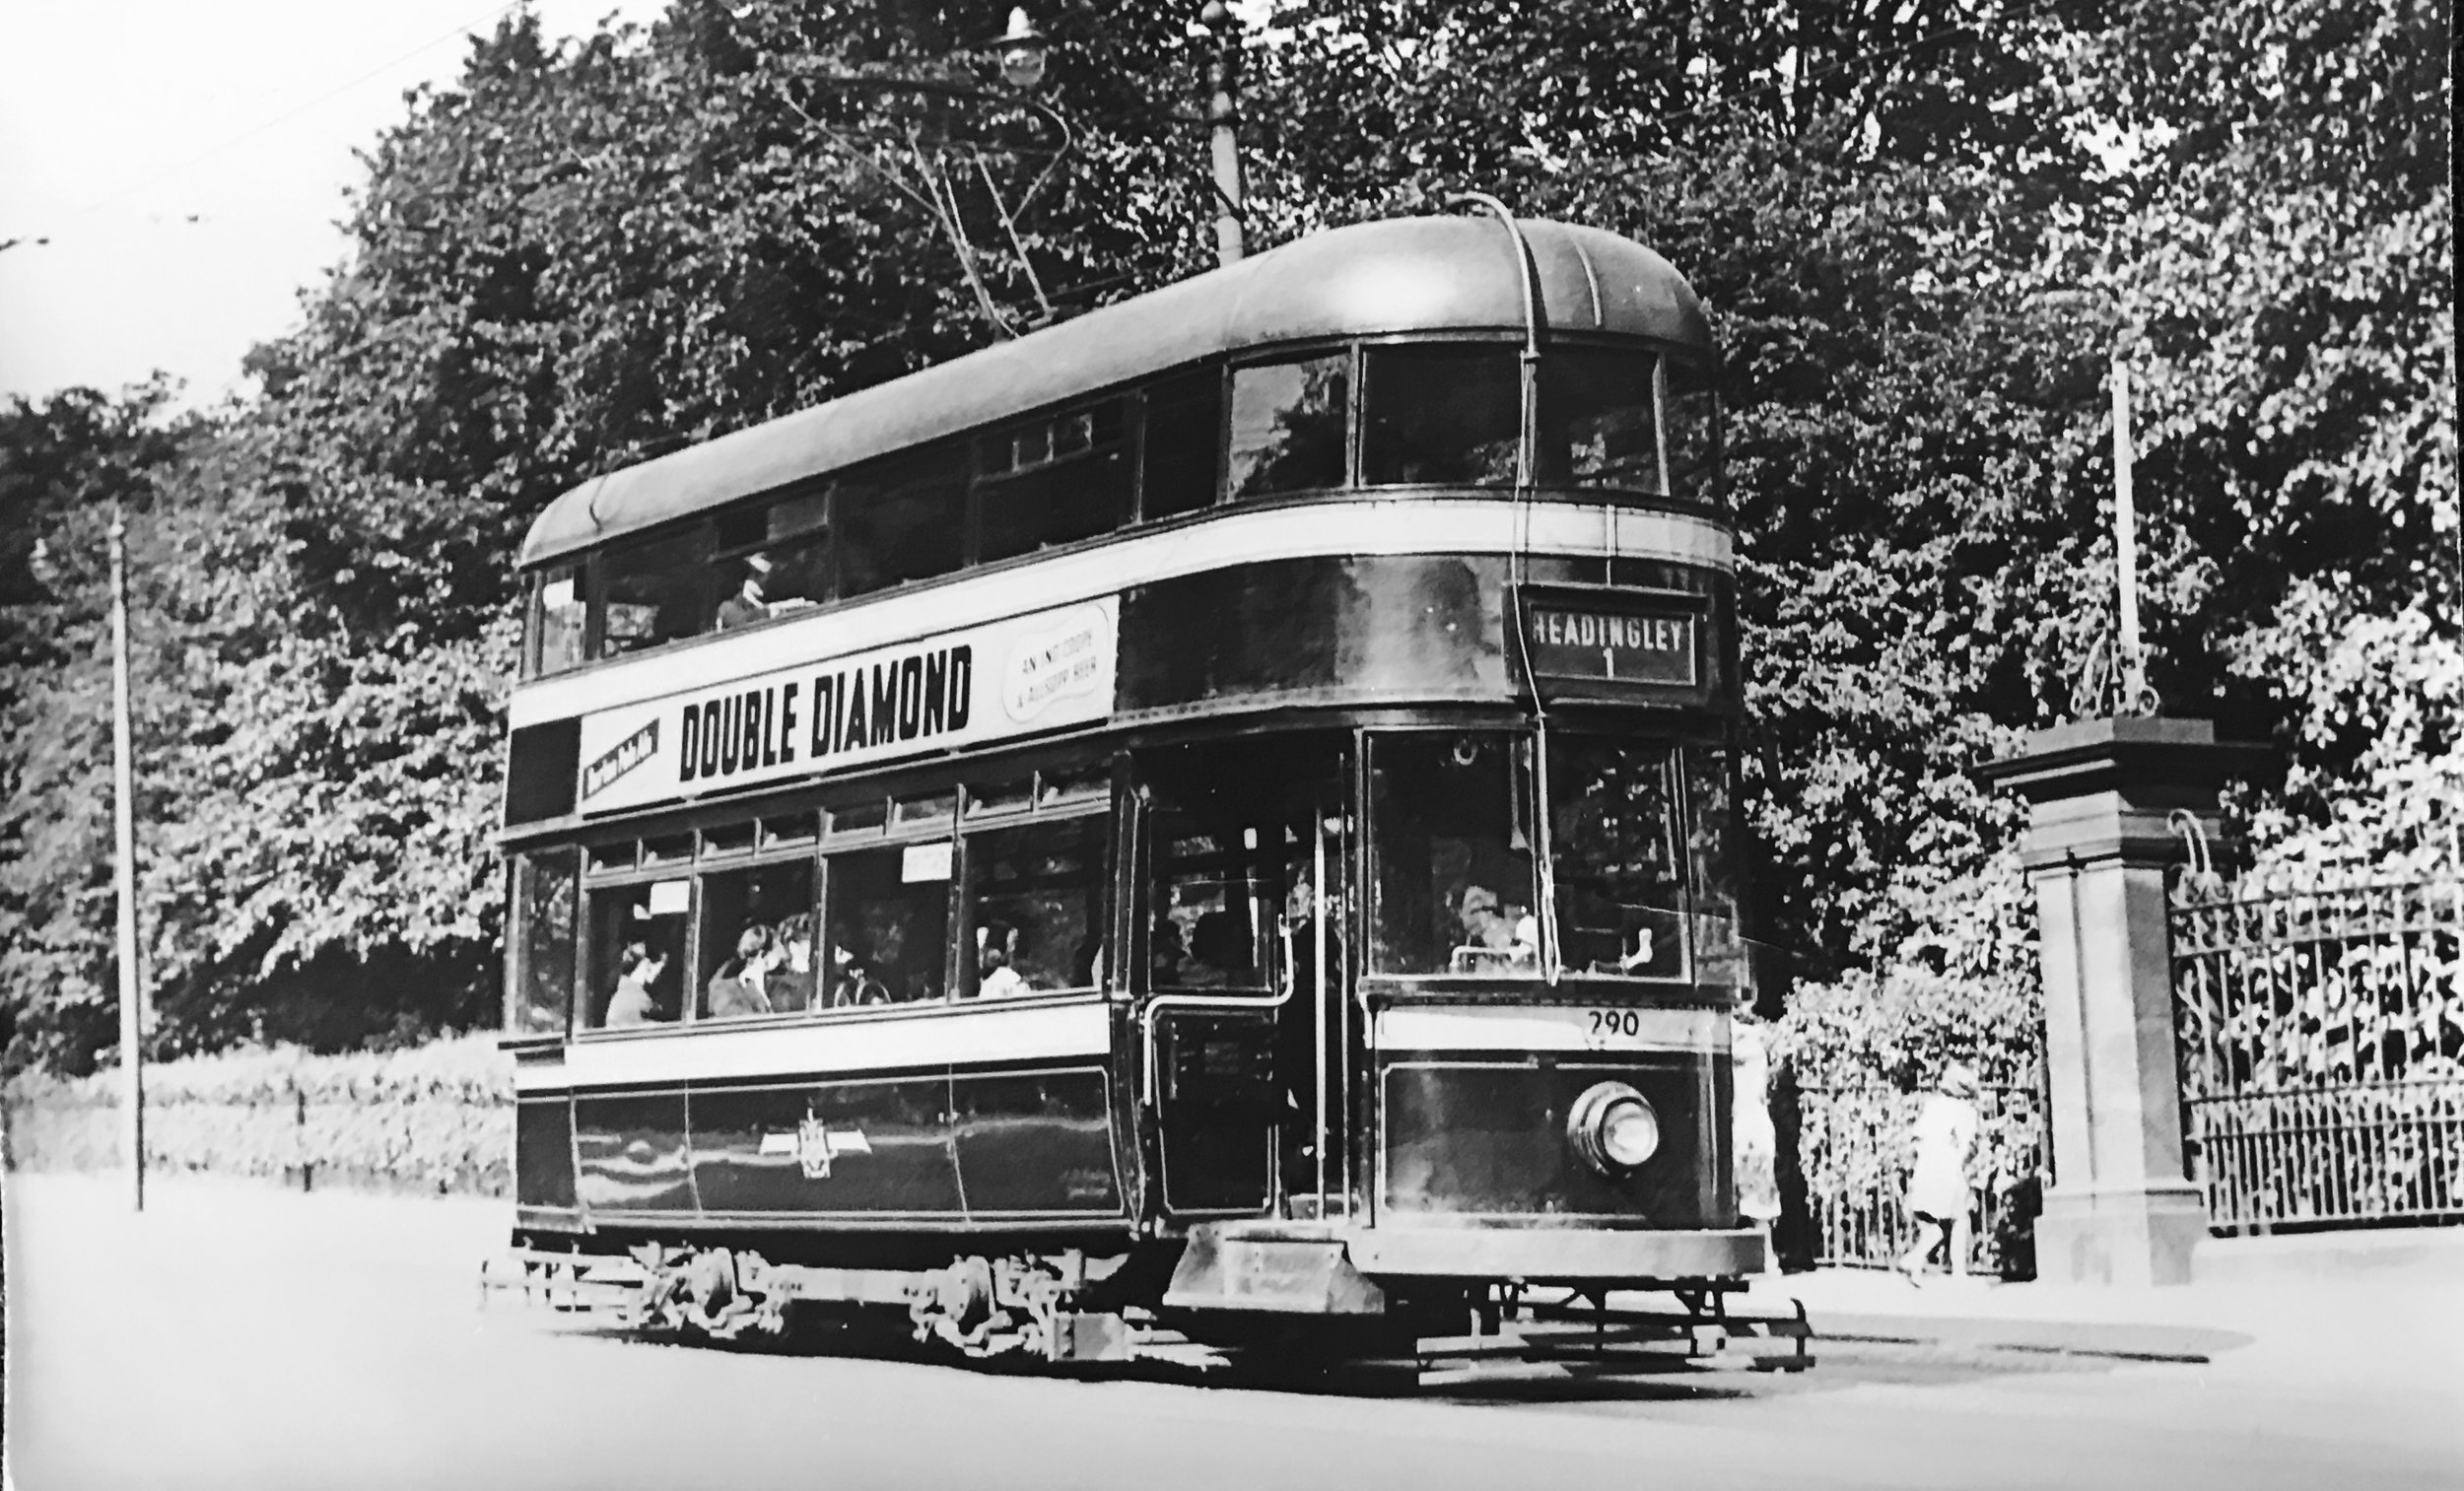 Tram, circa 1950